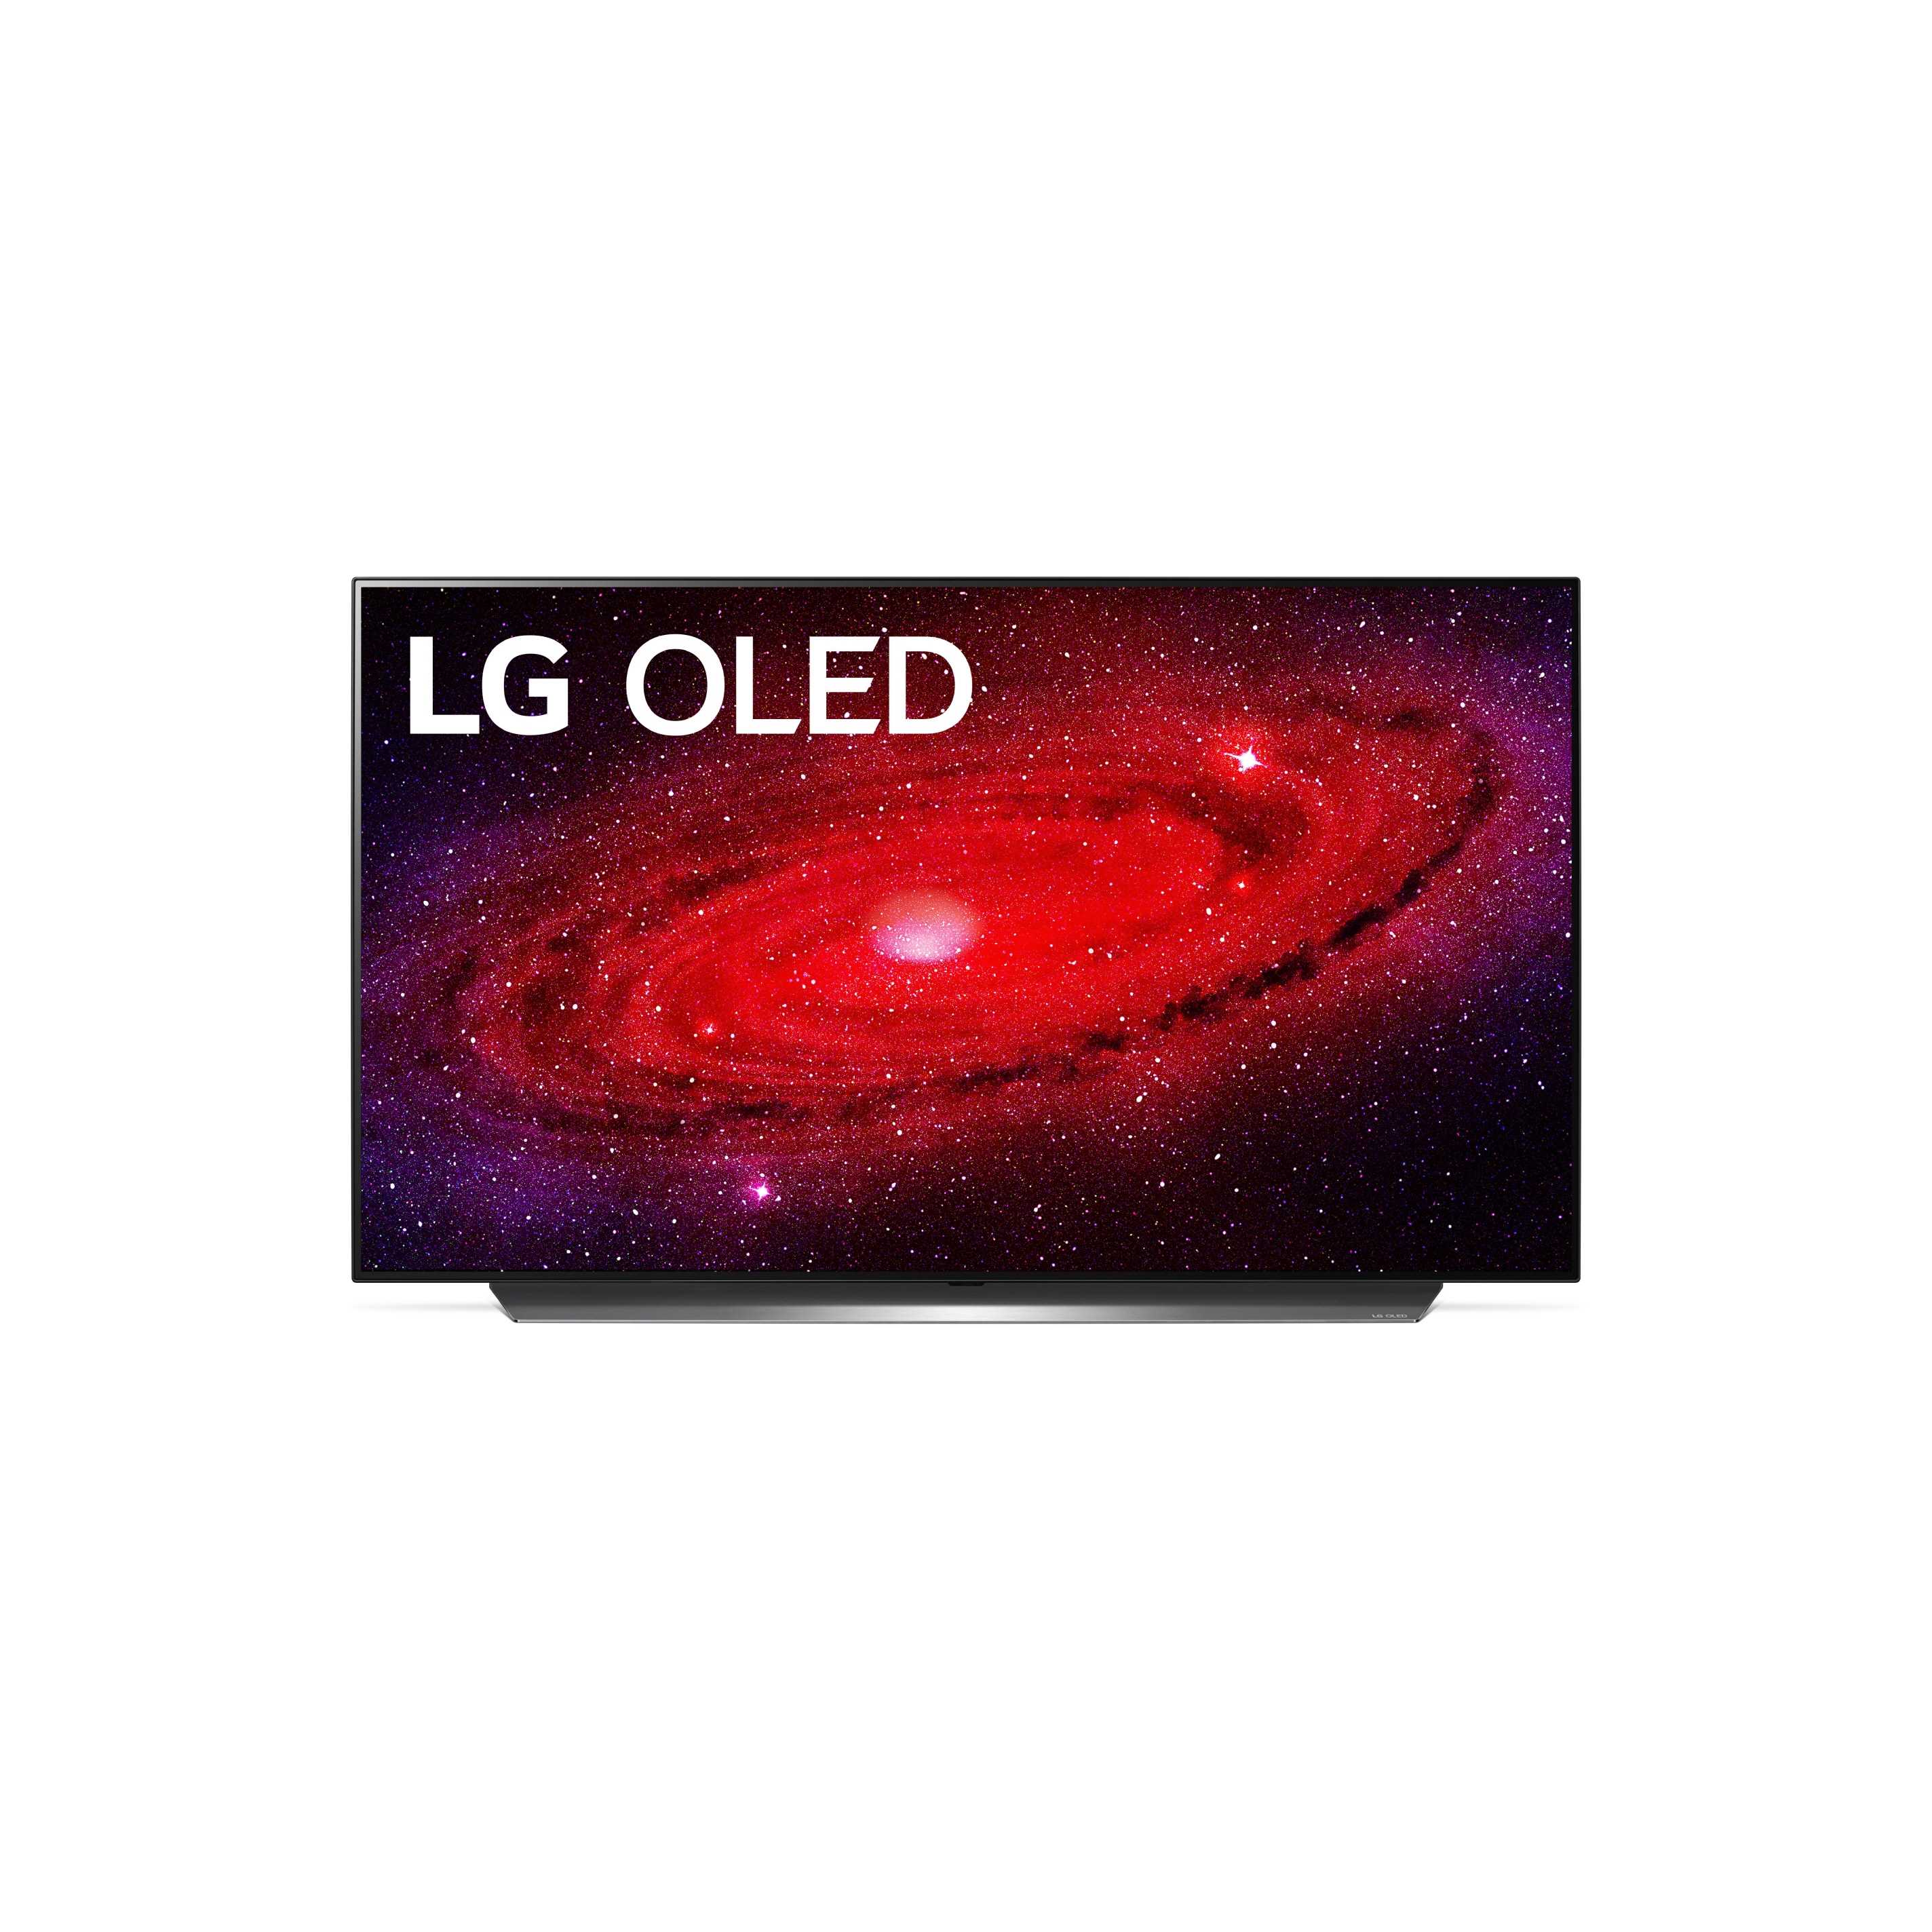 LG 48-inch OLED TV (1).jpg